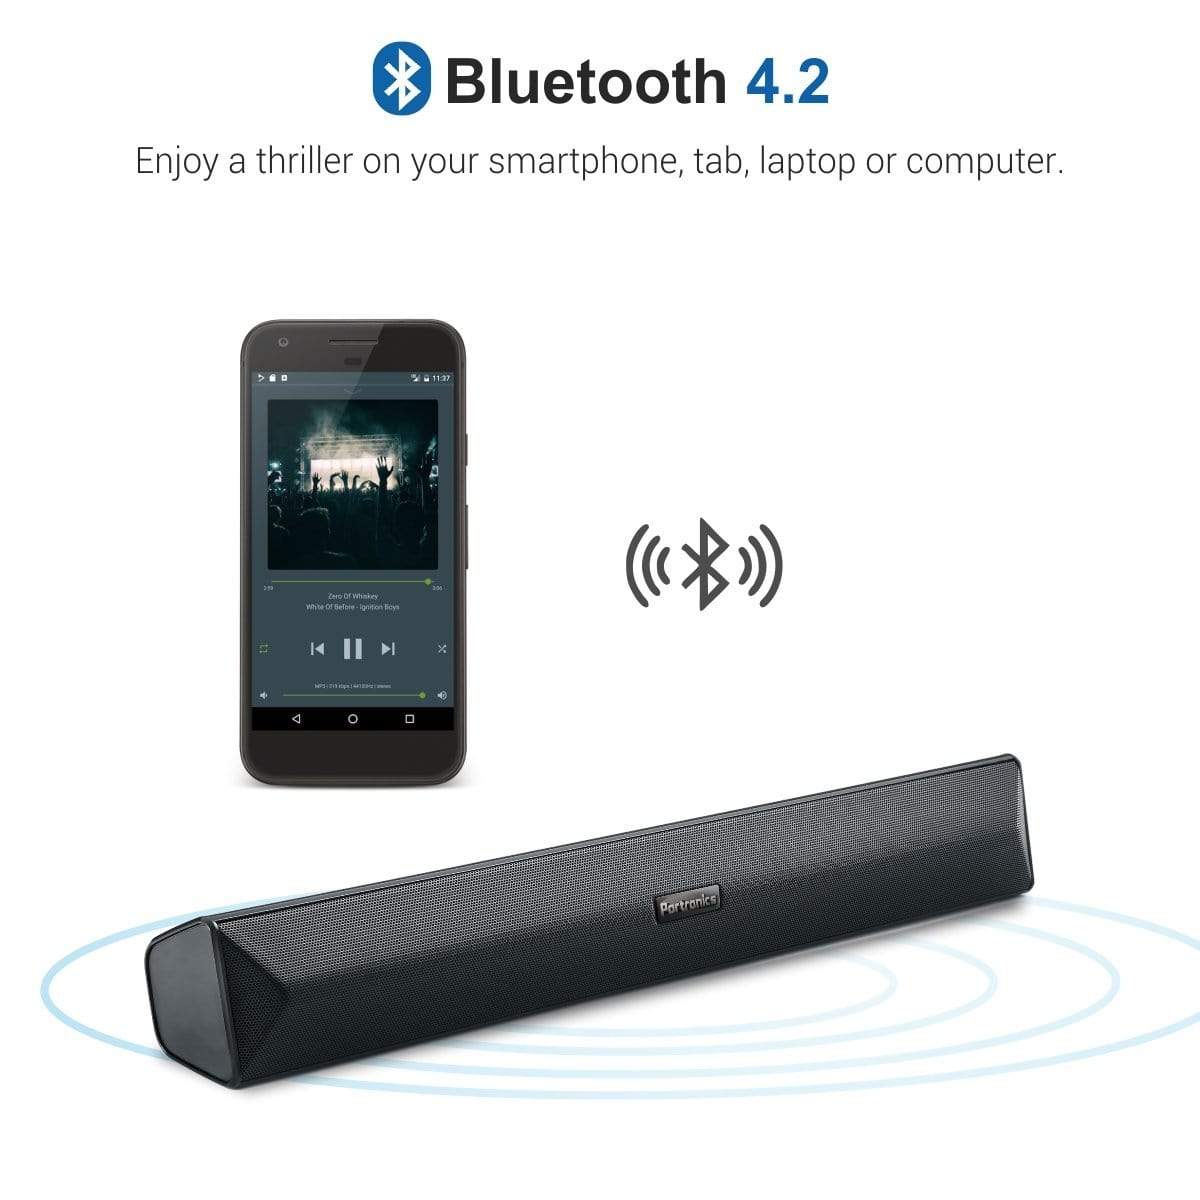 Portronics Pure Sound Pro III POR-891, Bluetooth Wireless SOUNDBAR-dealsplant